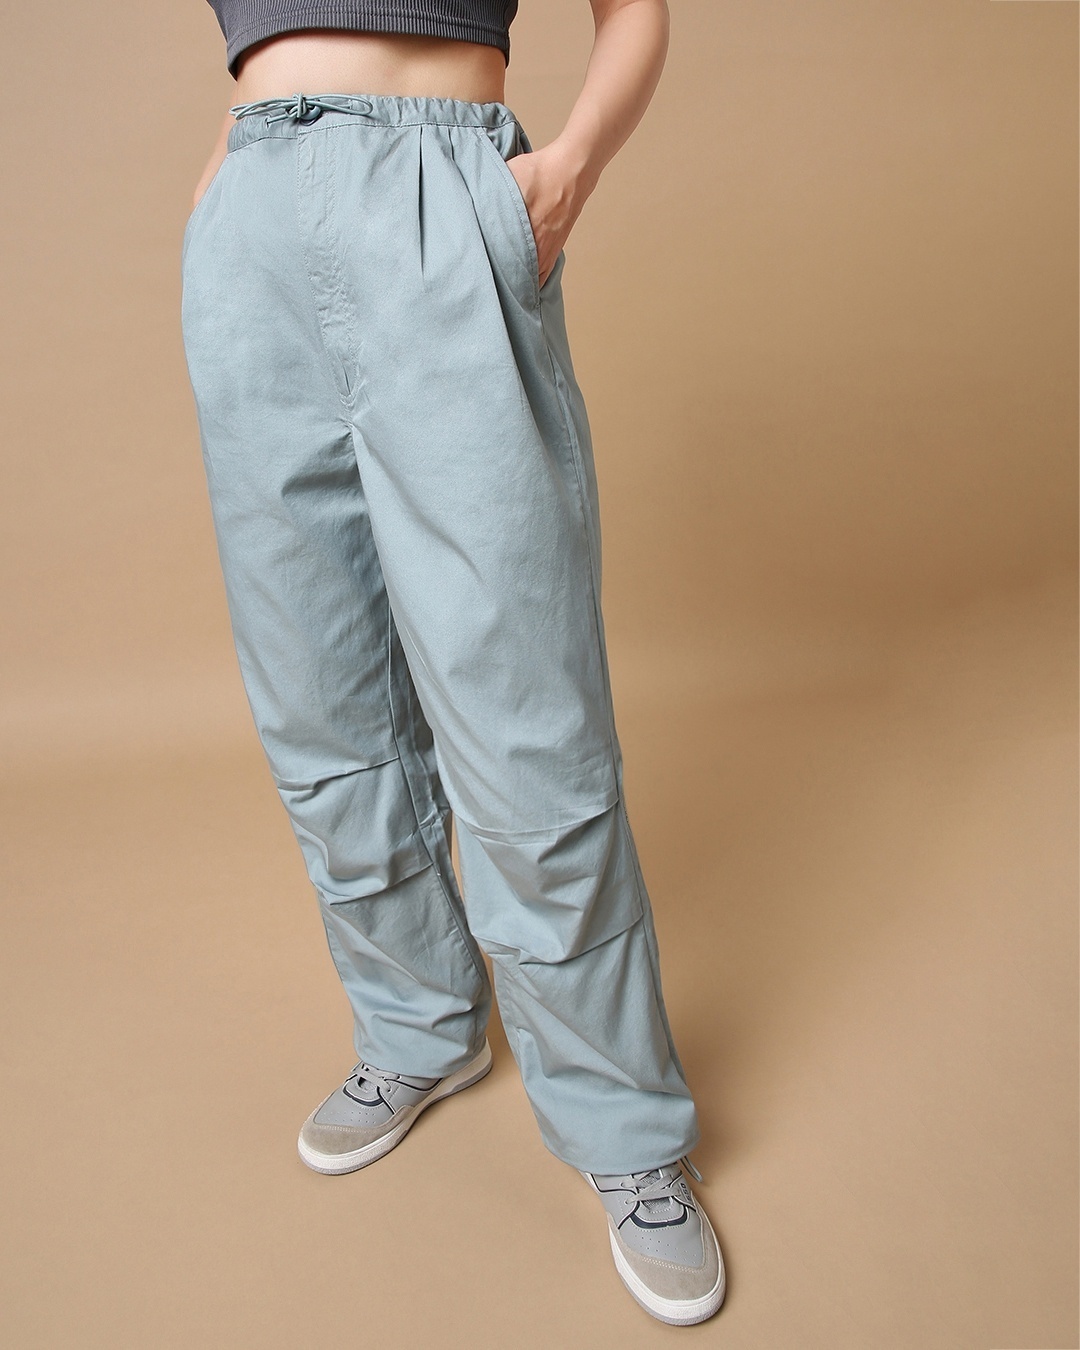 Chic Charcoal Grey Pants - Trouser Pants - Slit Dress Pants - Lulus